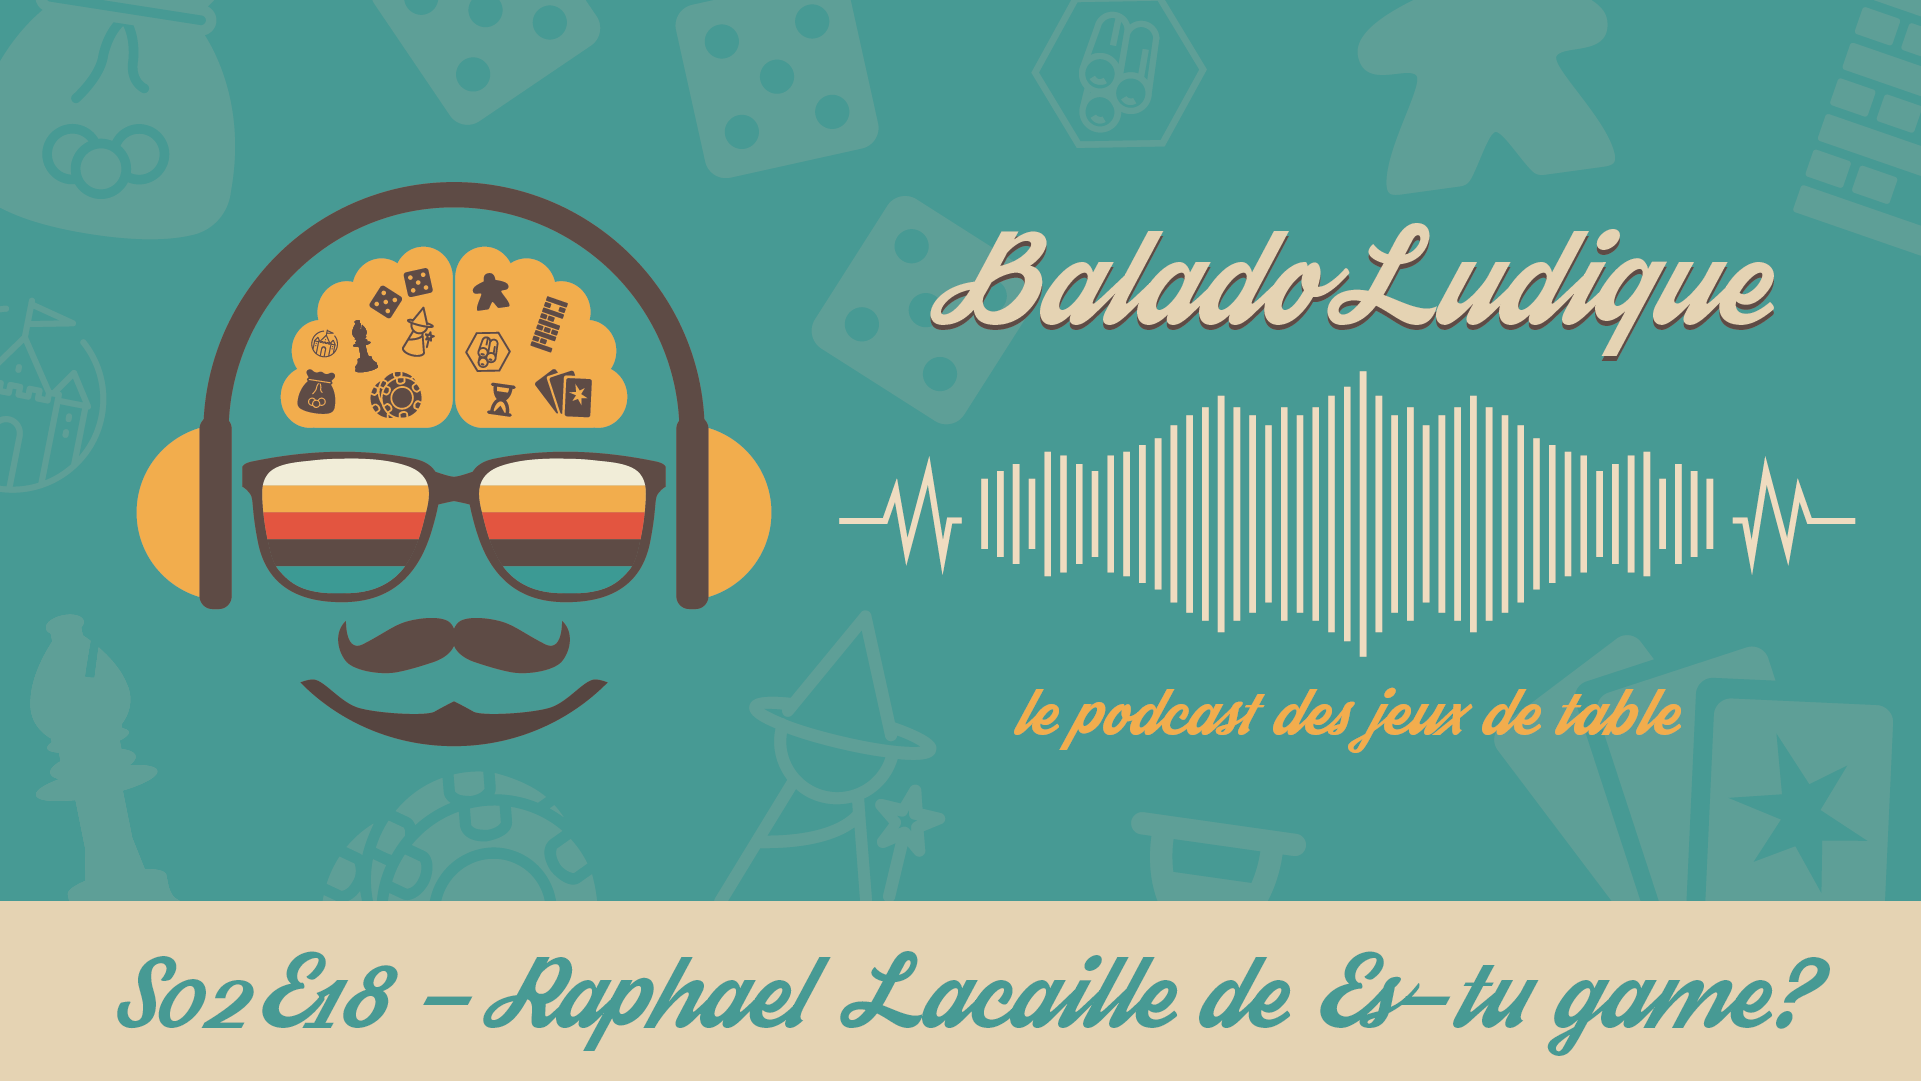 Raphael Lacaille de Es-tu Game? - BaladoLudique - s02e18